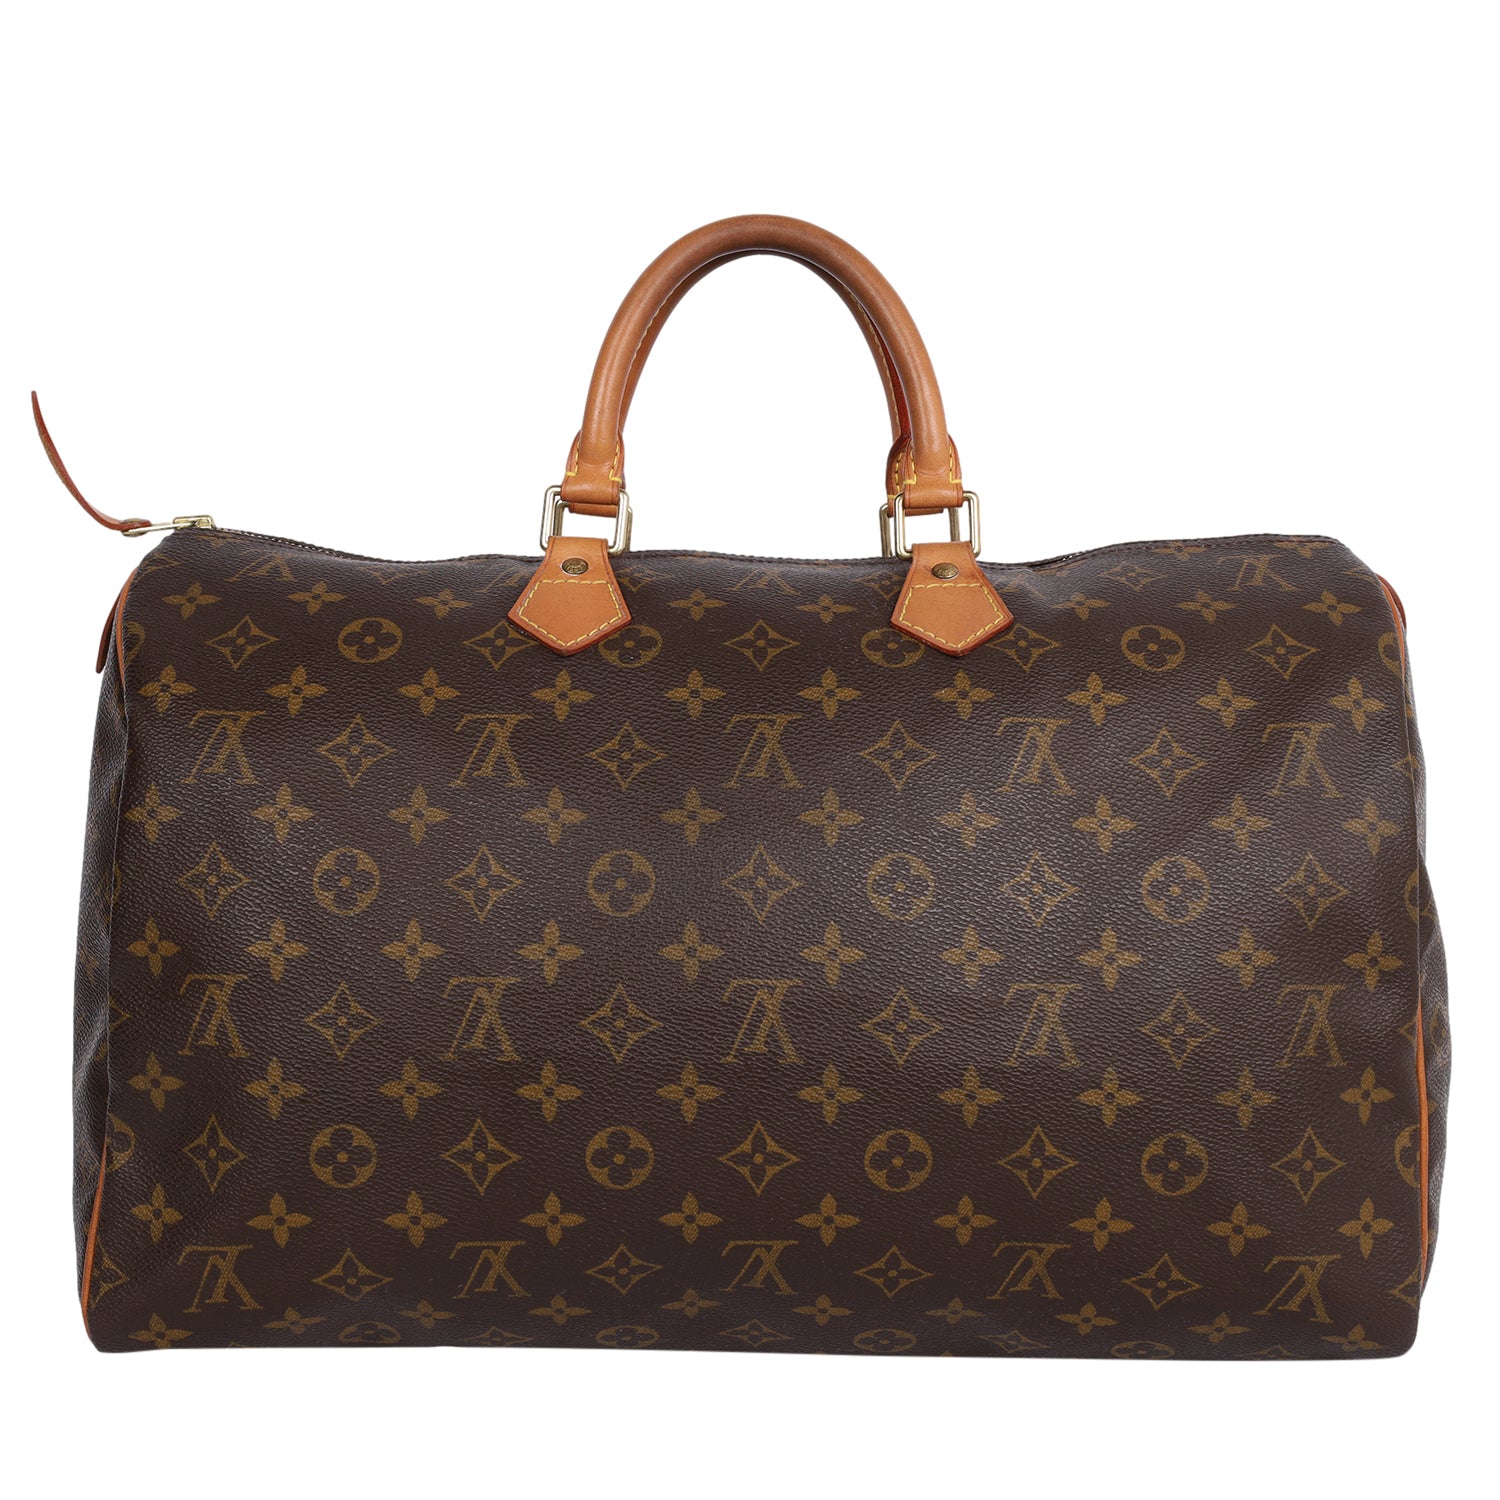 Authentic Louis Vuitton Speedy 25 monogram Handbag